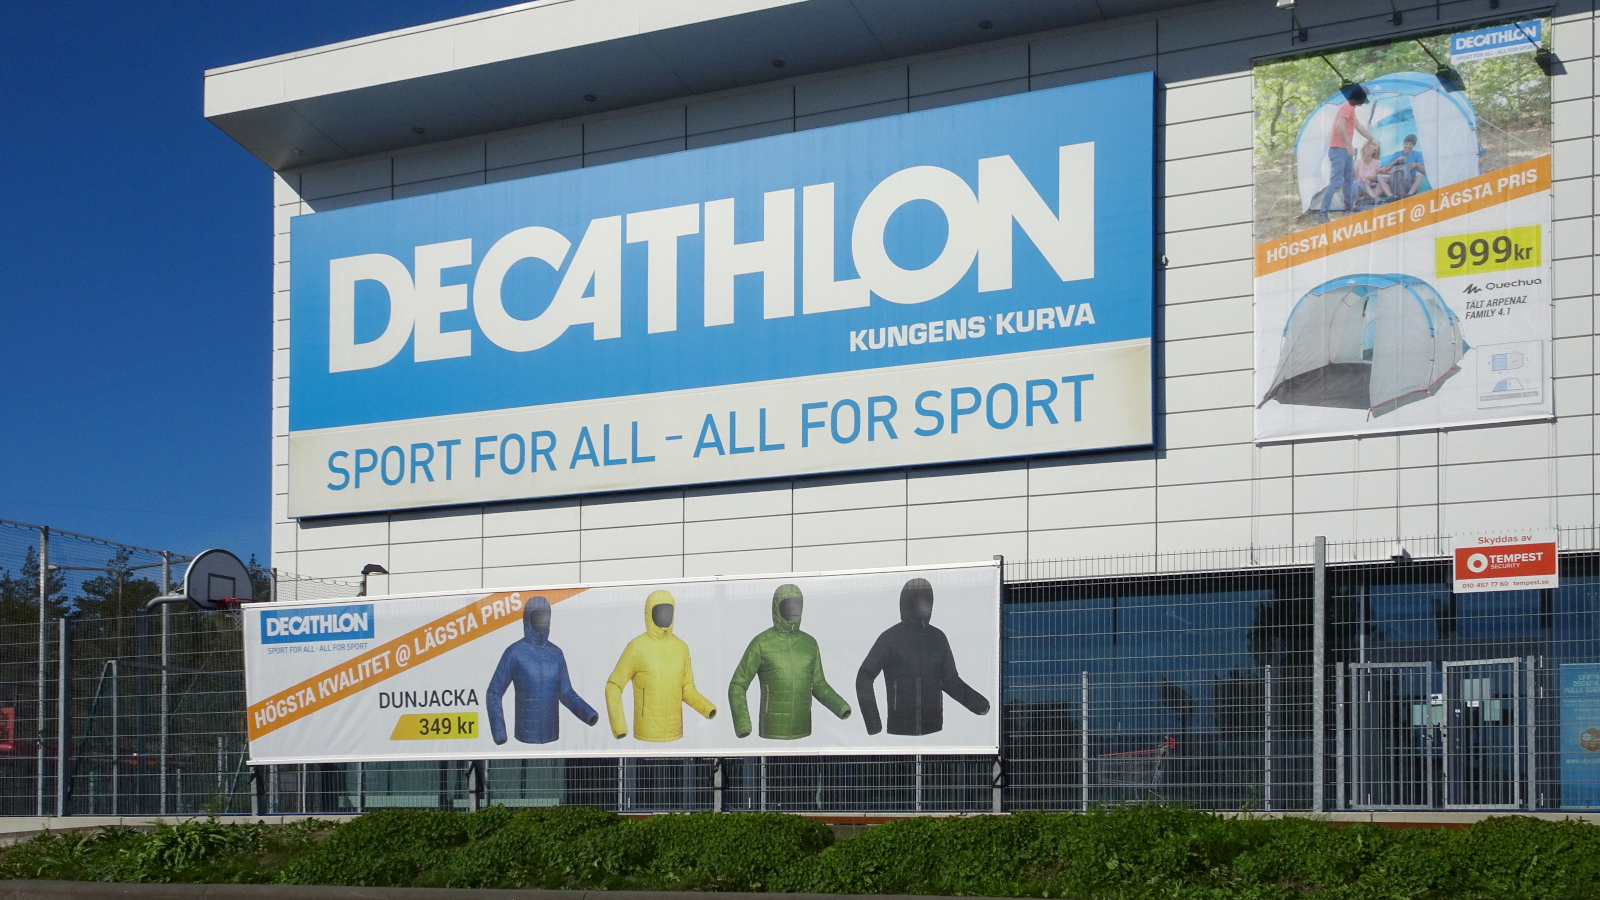 ‘Decathlon’ Sports Gear Retailer Leaked 123 Million Records Online